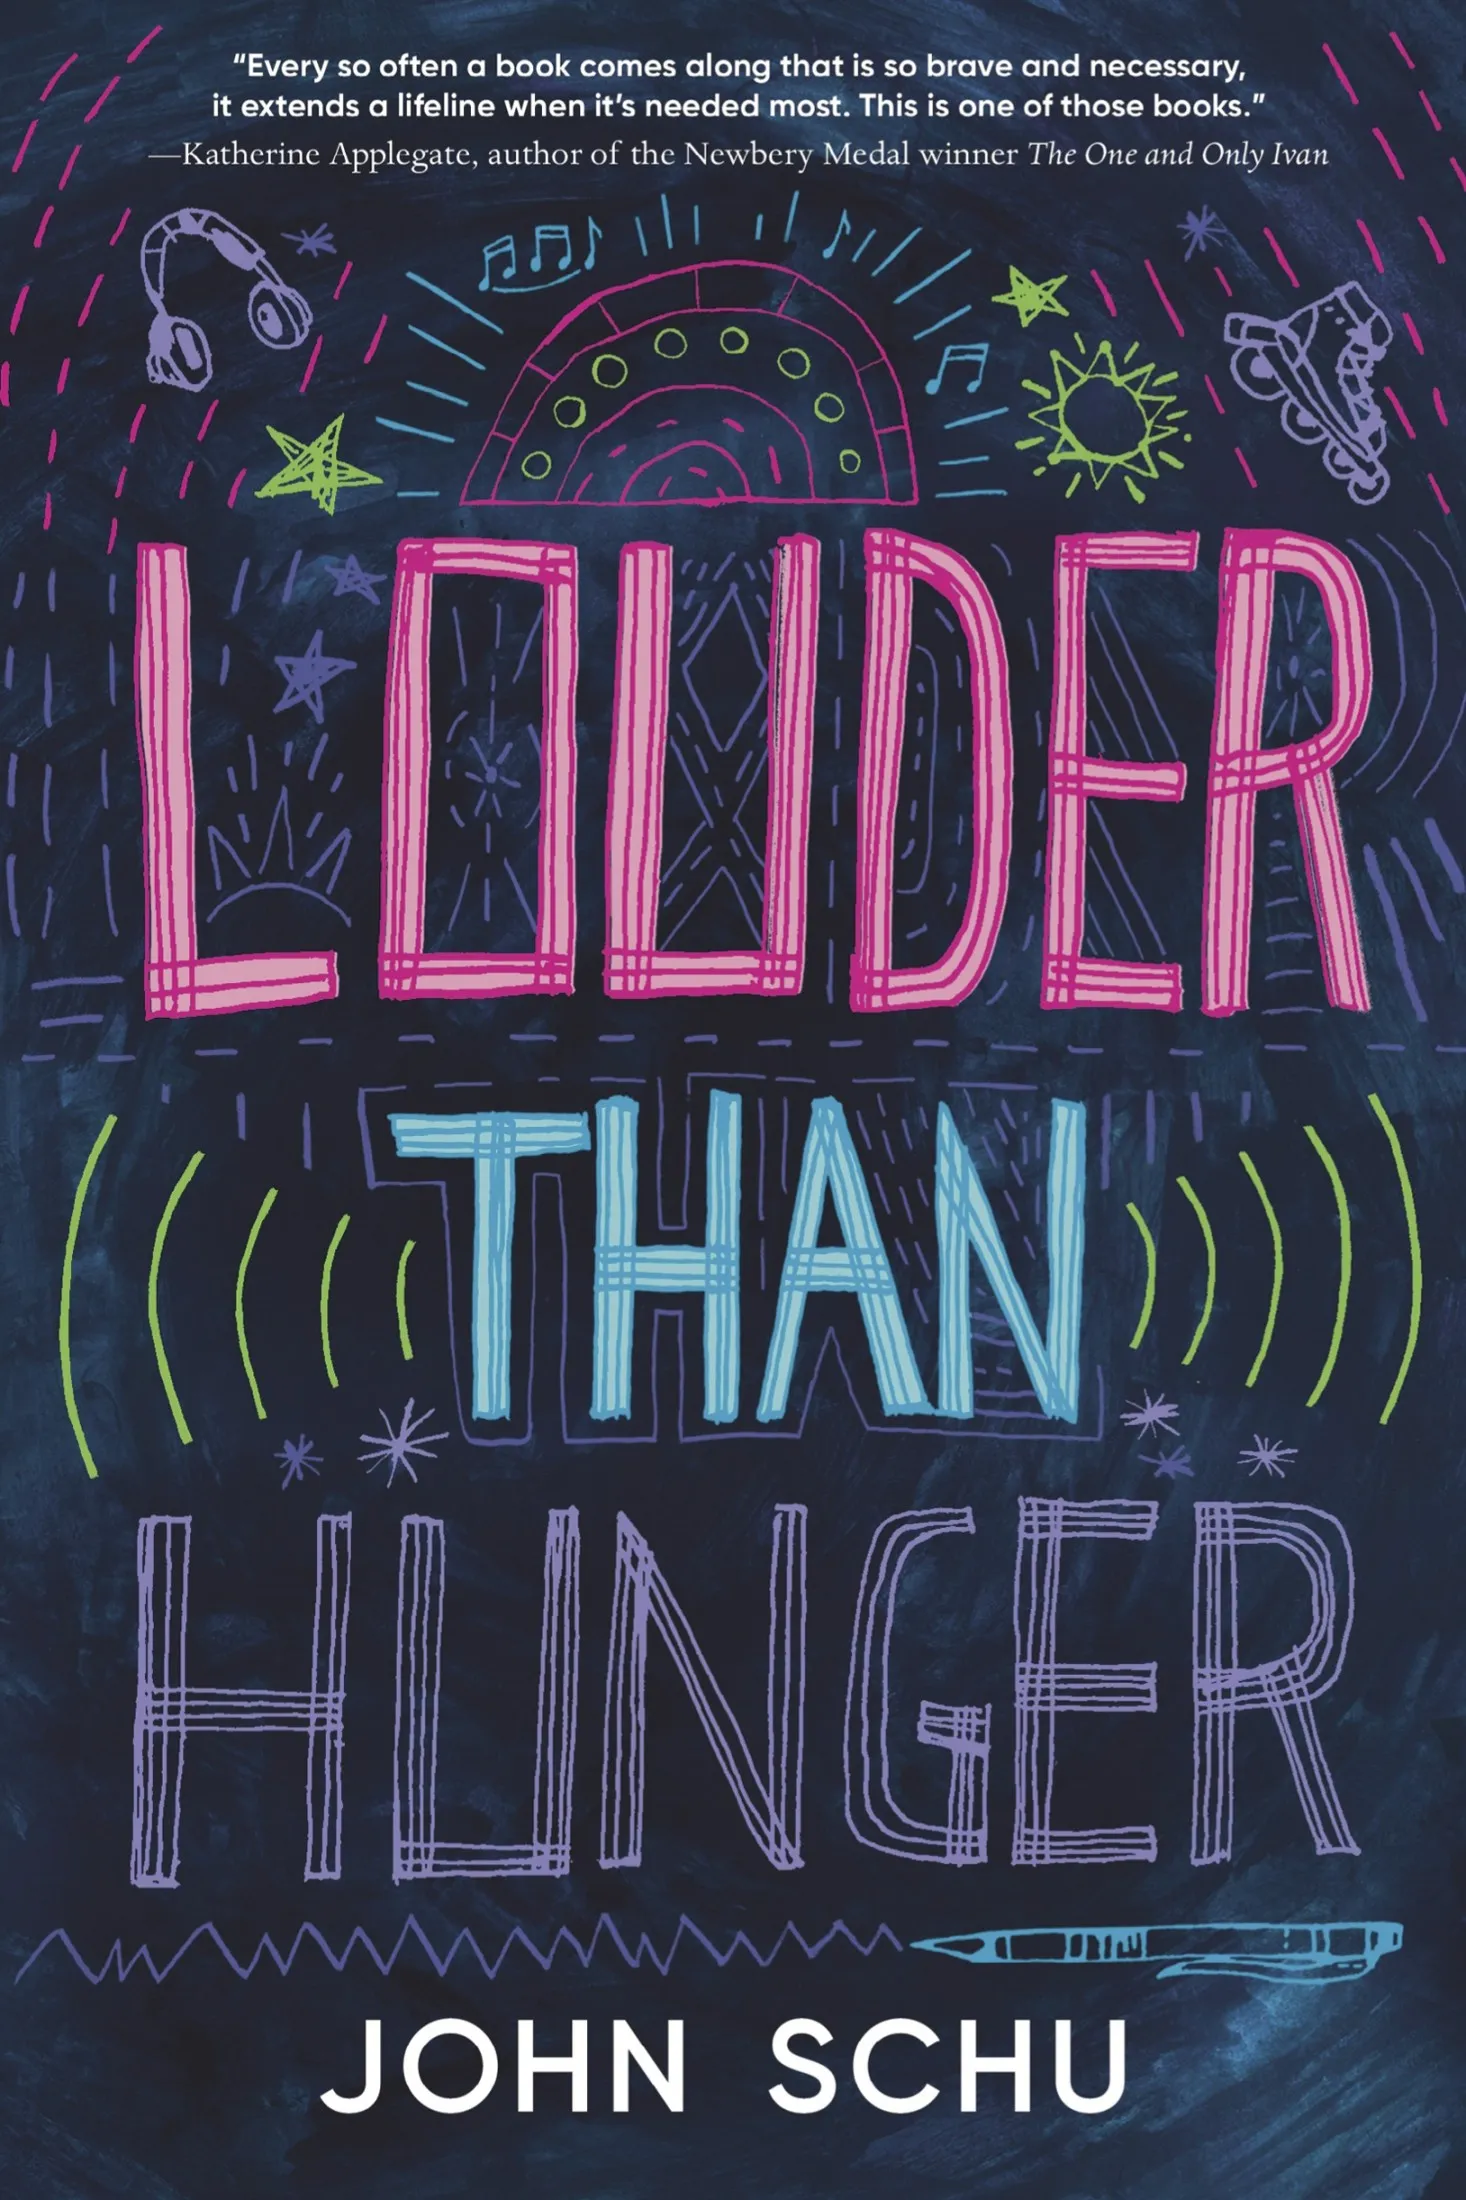 Louder Than Hunger